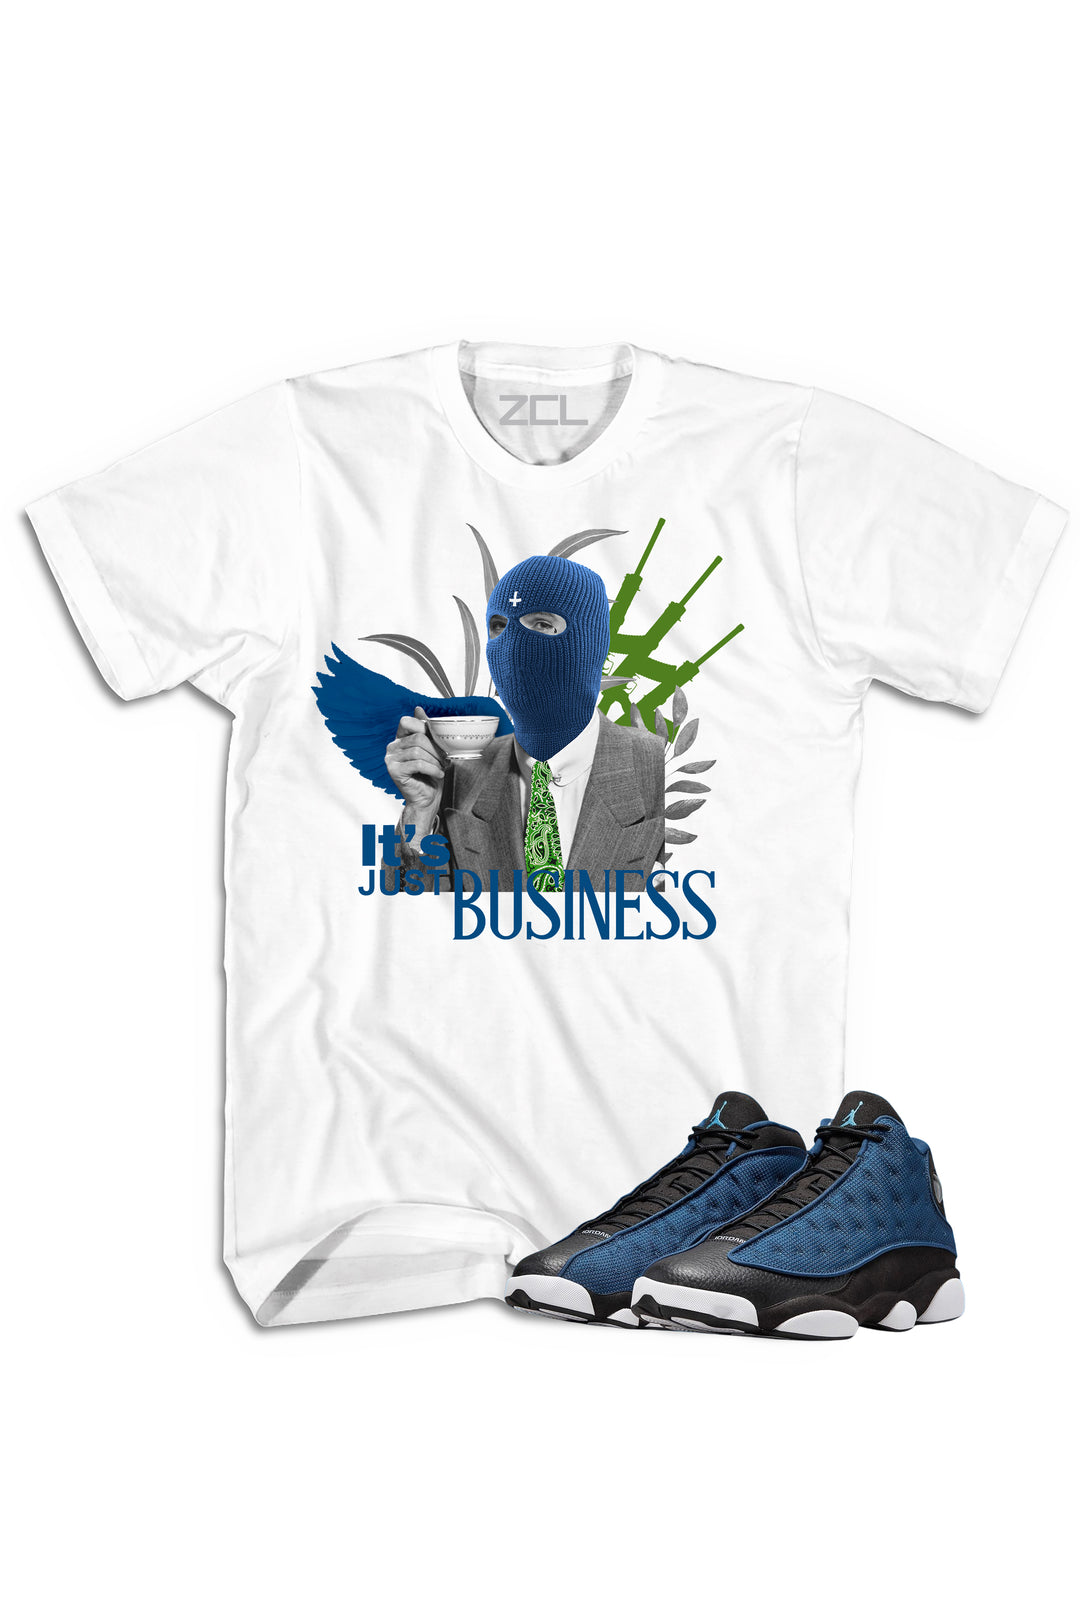 Air Jordan 13 "It's Just Business" Tee Brave Blue - Zamage